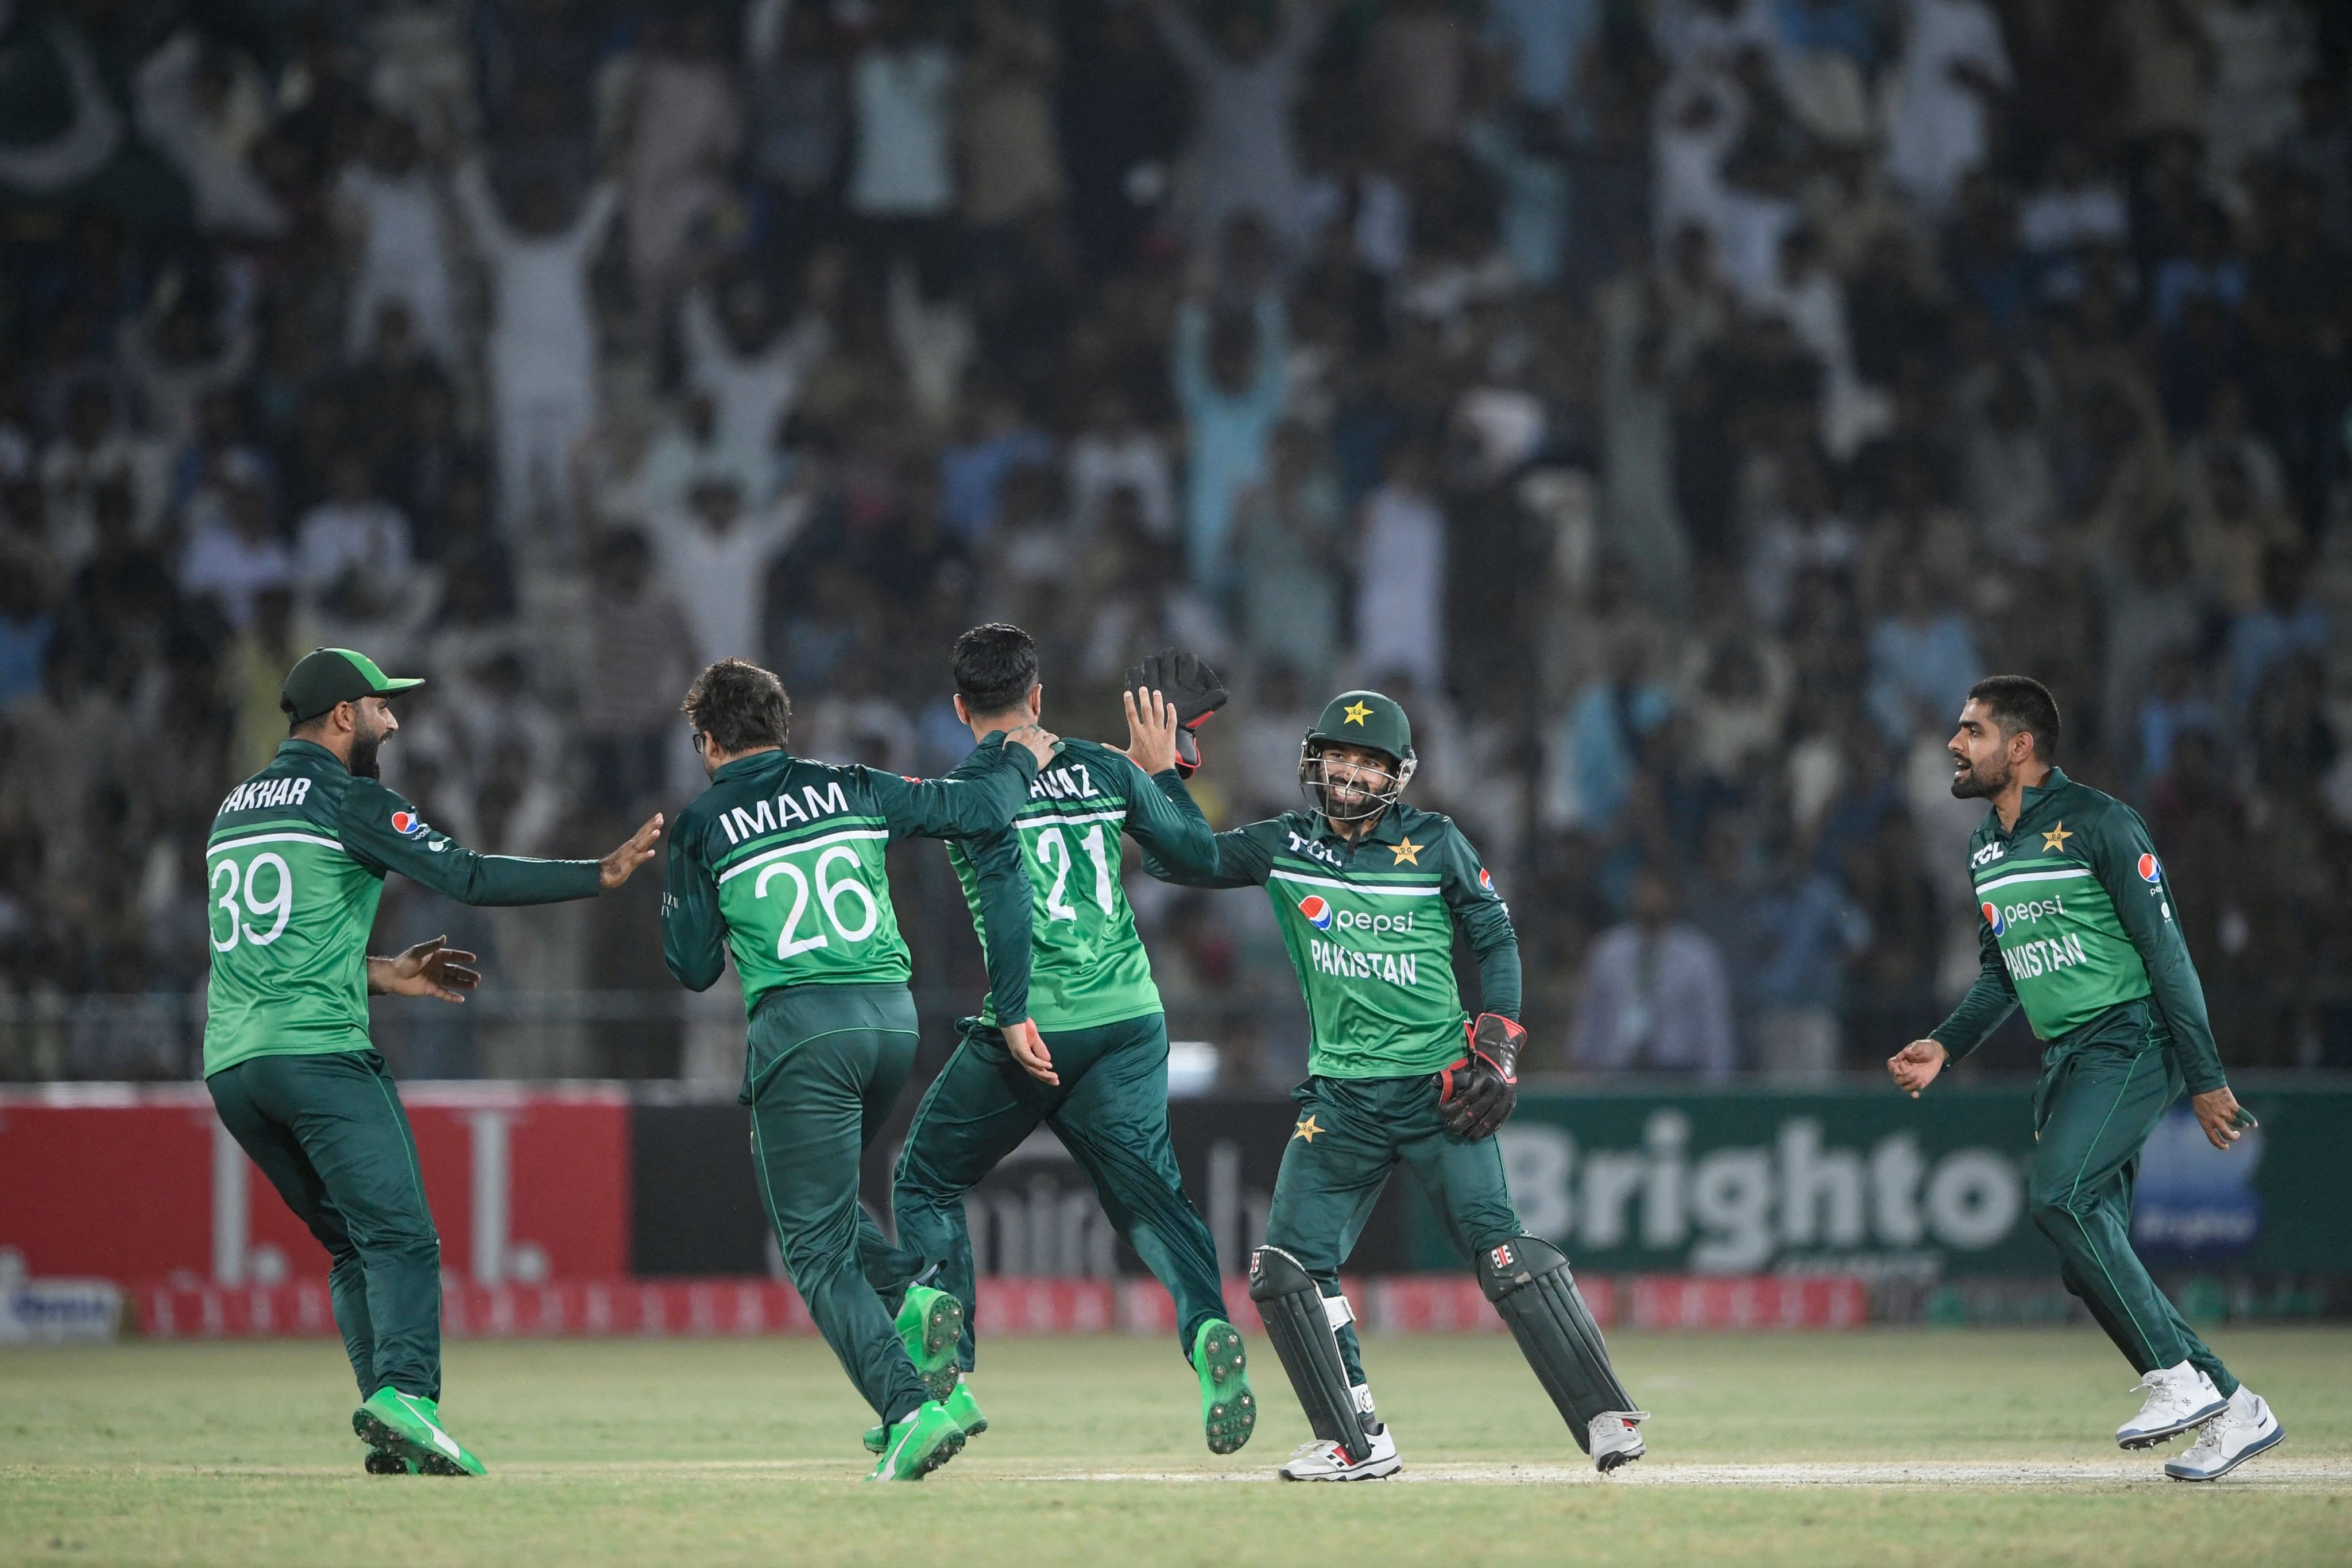 PAK vs WI Live: Mohammad Nawaz, Babar Azam, Imam-ul-Haq star as Pakistan maul West Indies, clinch 120-run win in Multan - Check Highlights